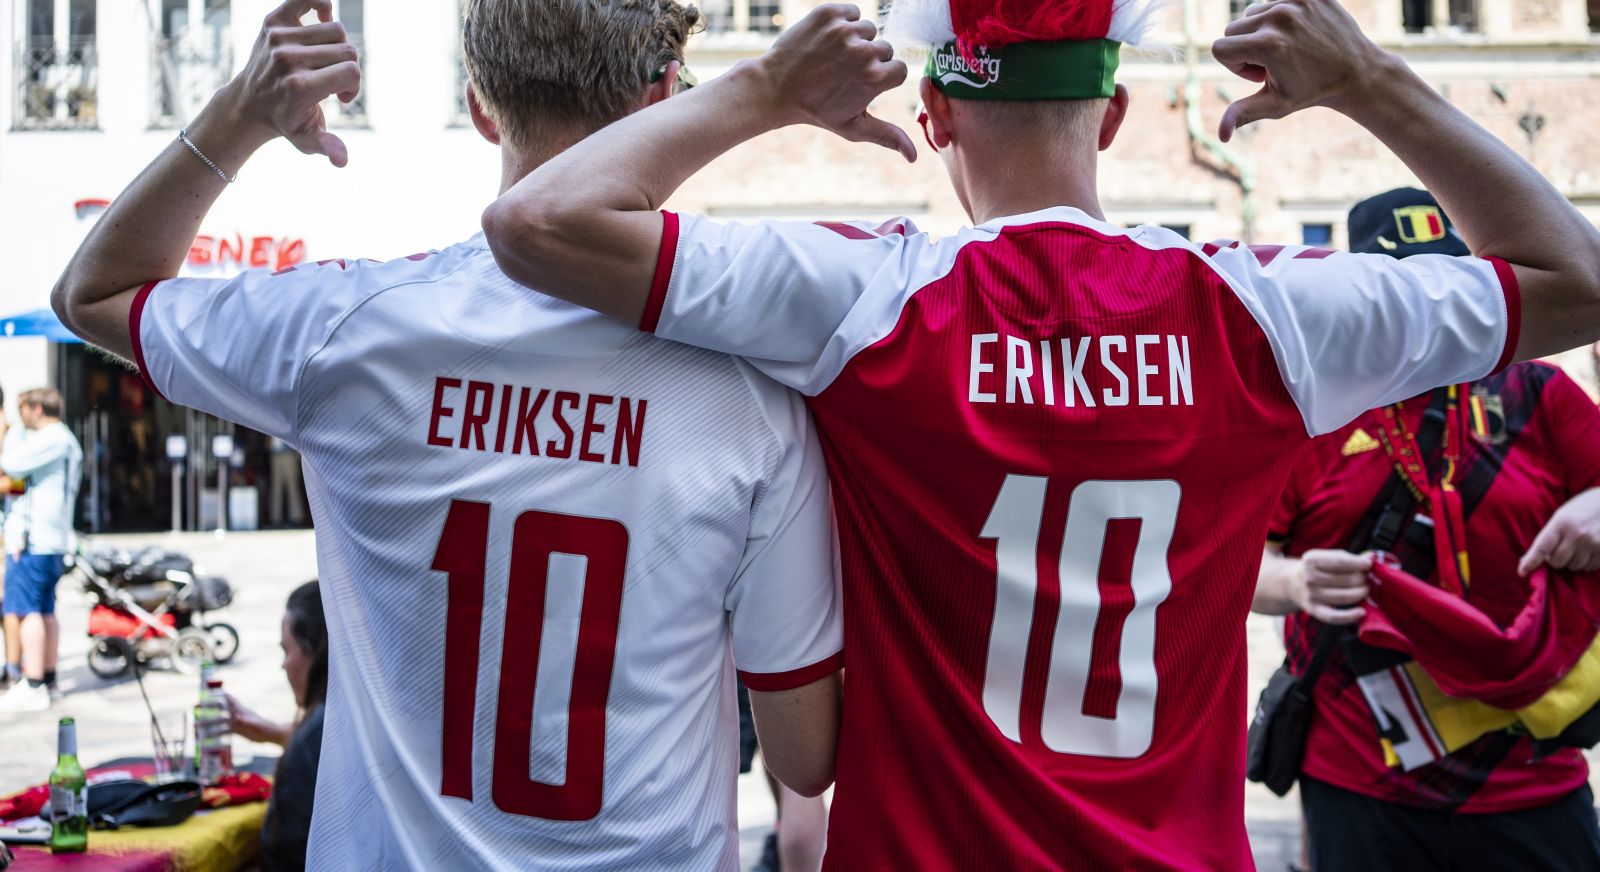 epa09279756 Danish fans wearing Christian Eriksen jersey cheer in Copenhagen, Denmark, 17 June 2021, hours before the start of the Group B match of EURO2020 between Denmark and Belgium.  EPA/Emil Helms  DENMARK OUT